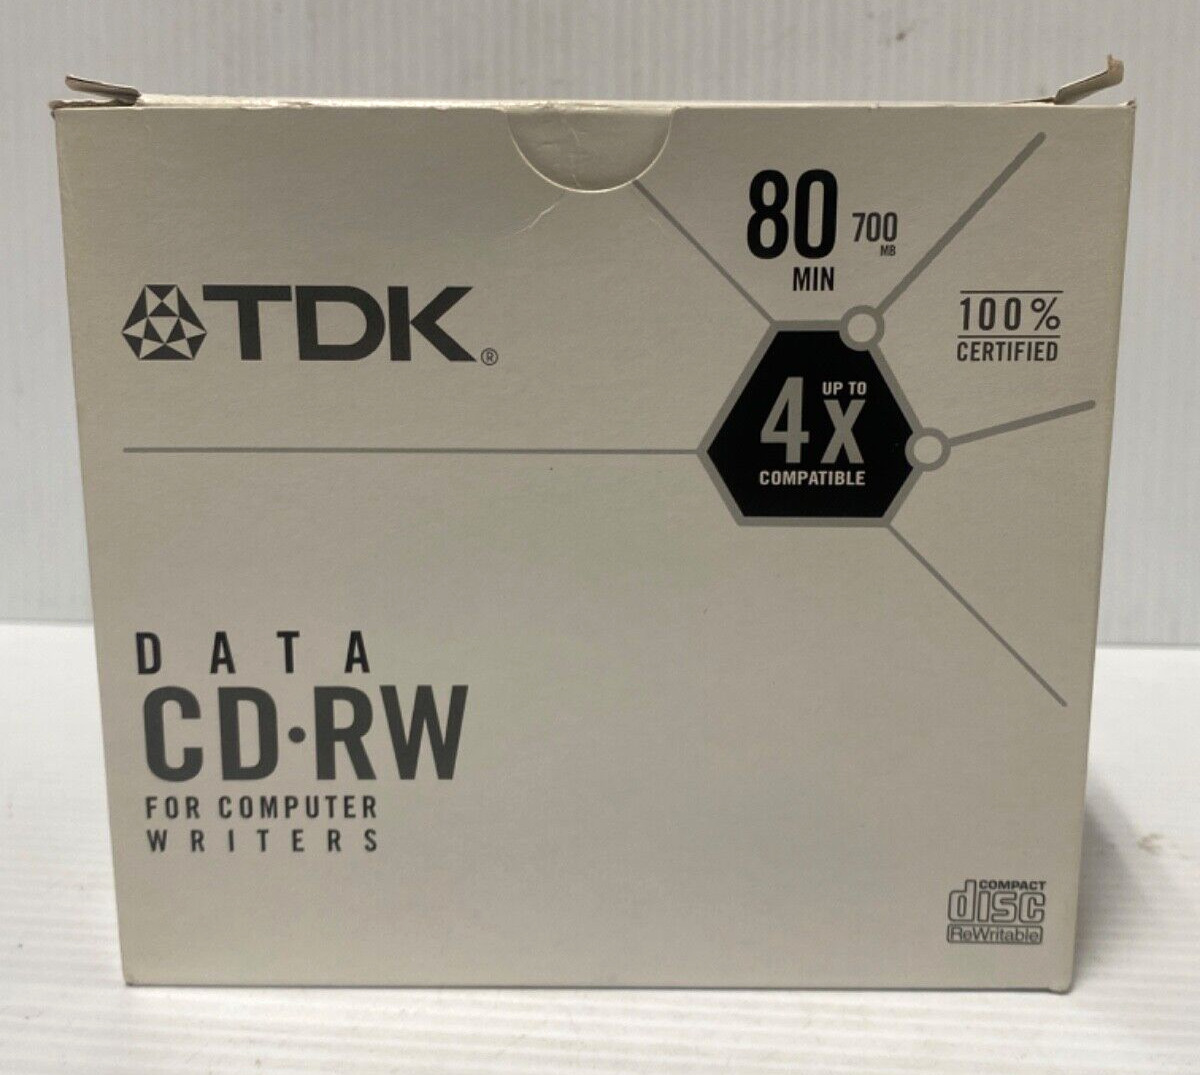 TDK DATA CD-RW For Computer Writers 80min 700MB - QTY 9 Discs (FC208-3Q2113